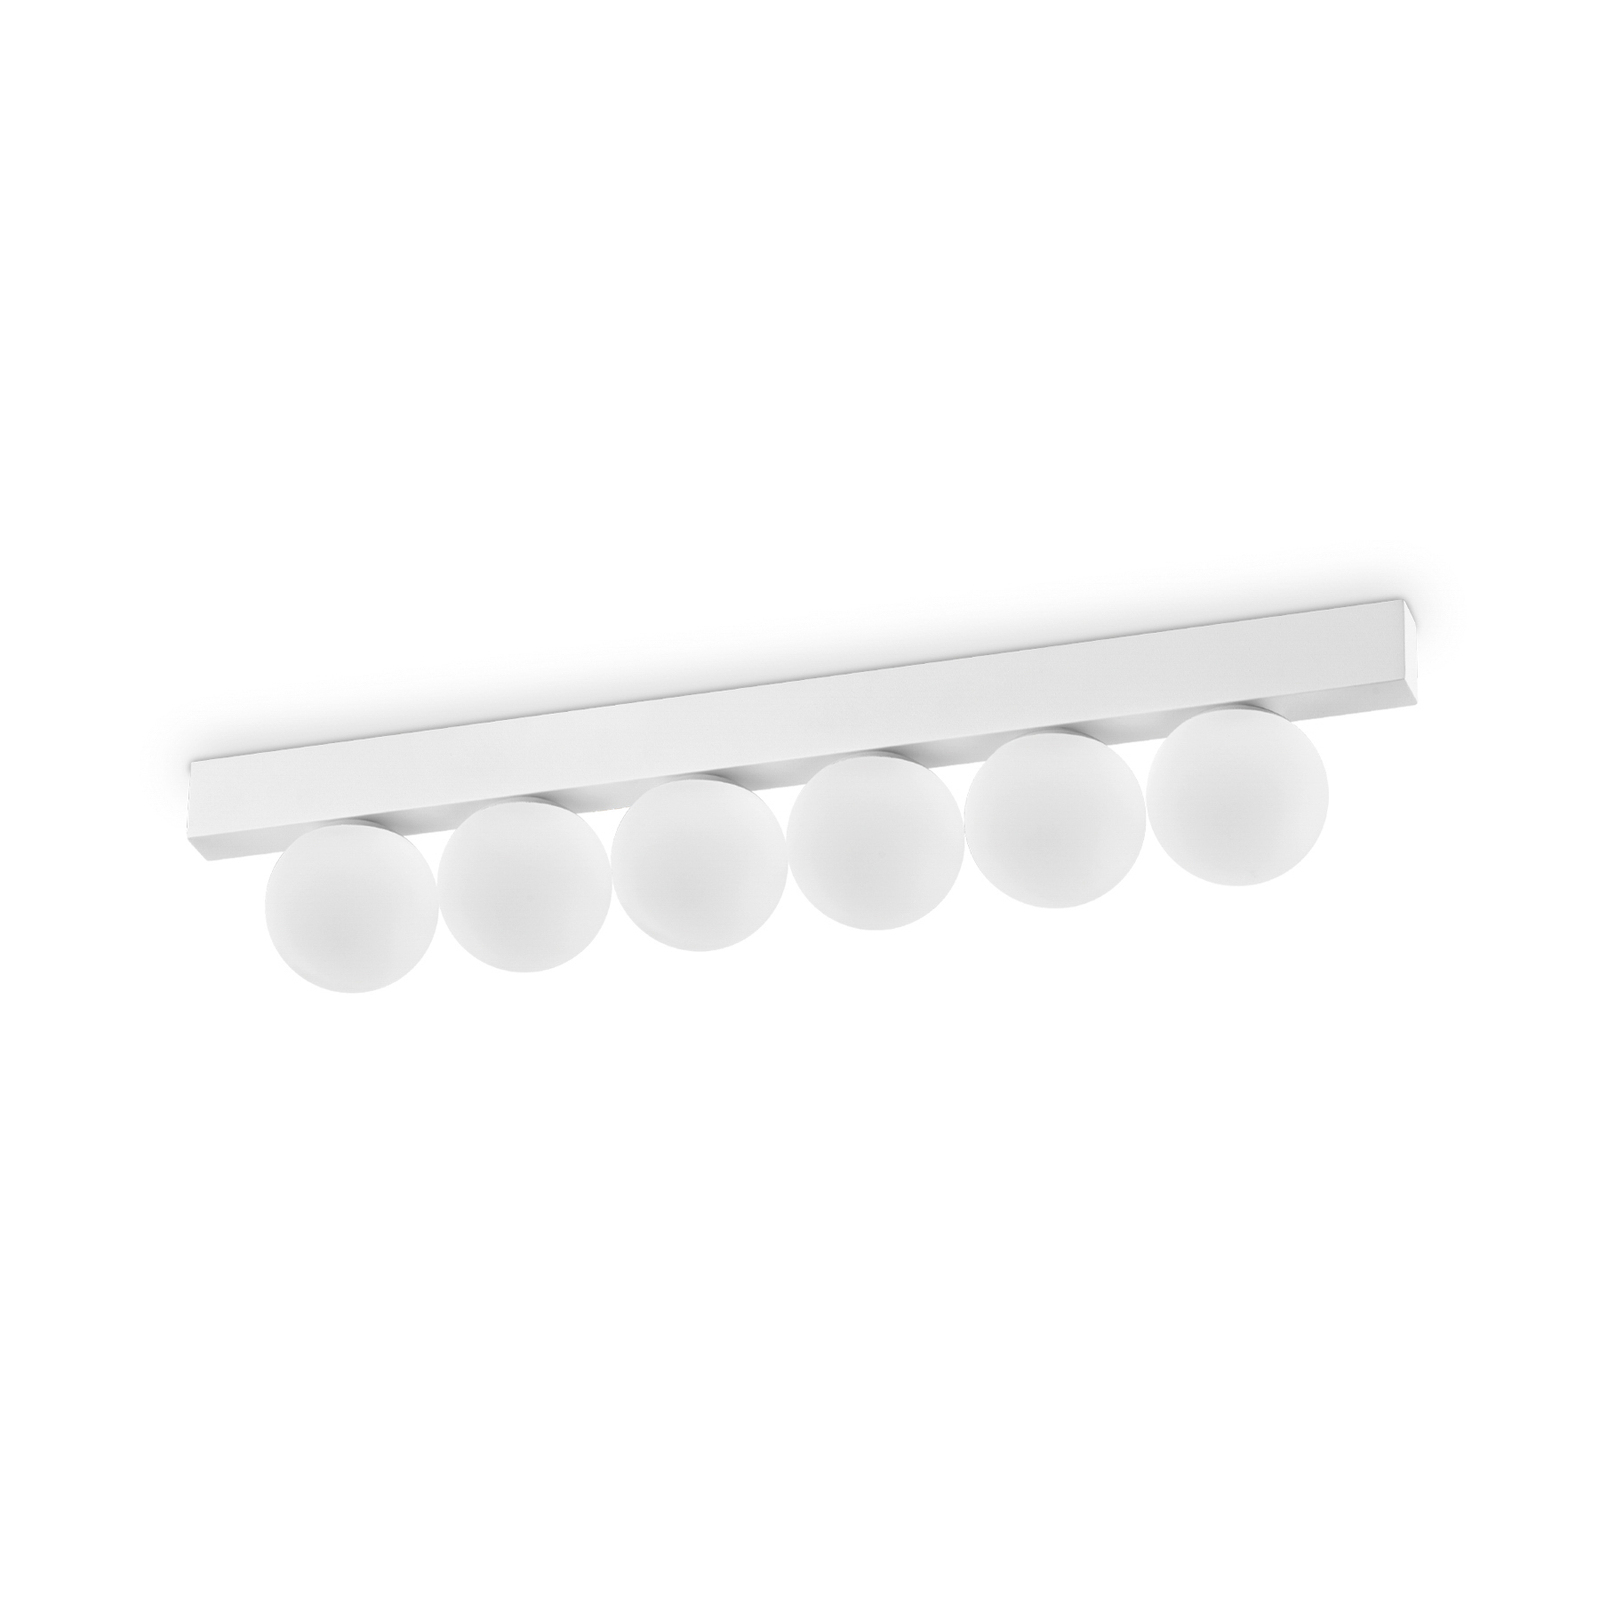 Ideal Lux Plafoniera Ping Pong bianca a 6 luci, vetro opalino